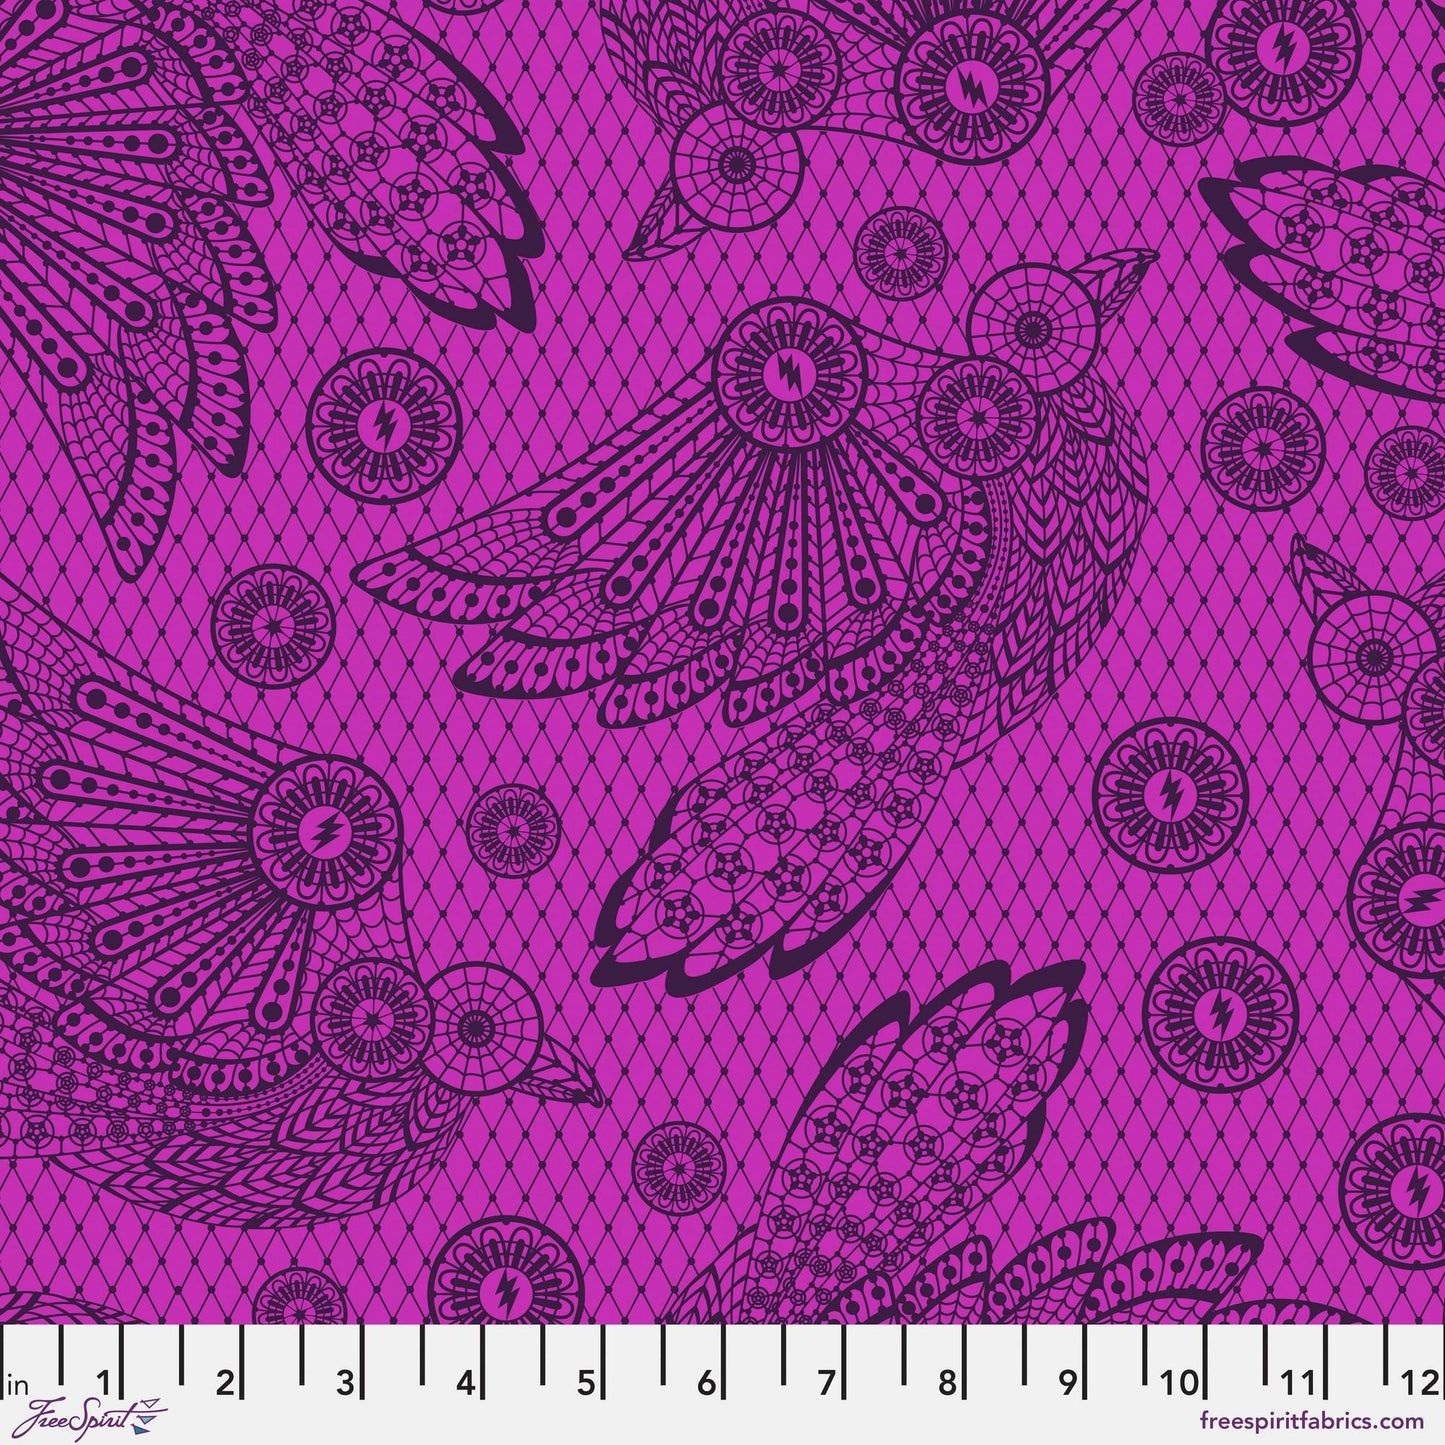 Raven Lace Oleander - Nightshade Deja Vu - Tula Pink - Freespirit Fabrics - 100% Quilters Cotton